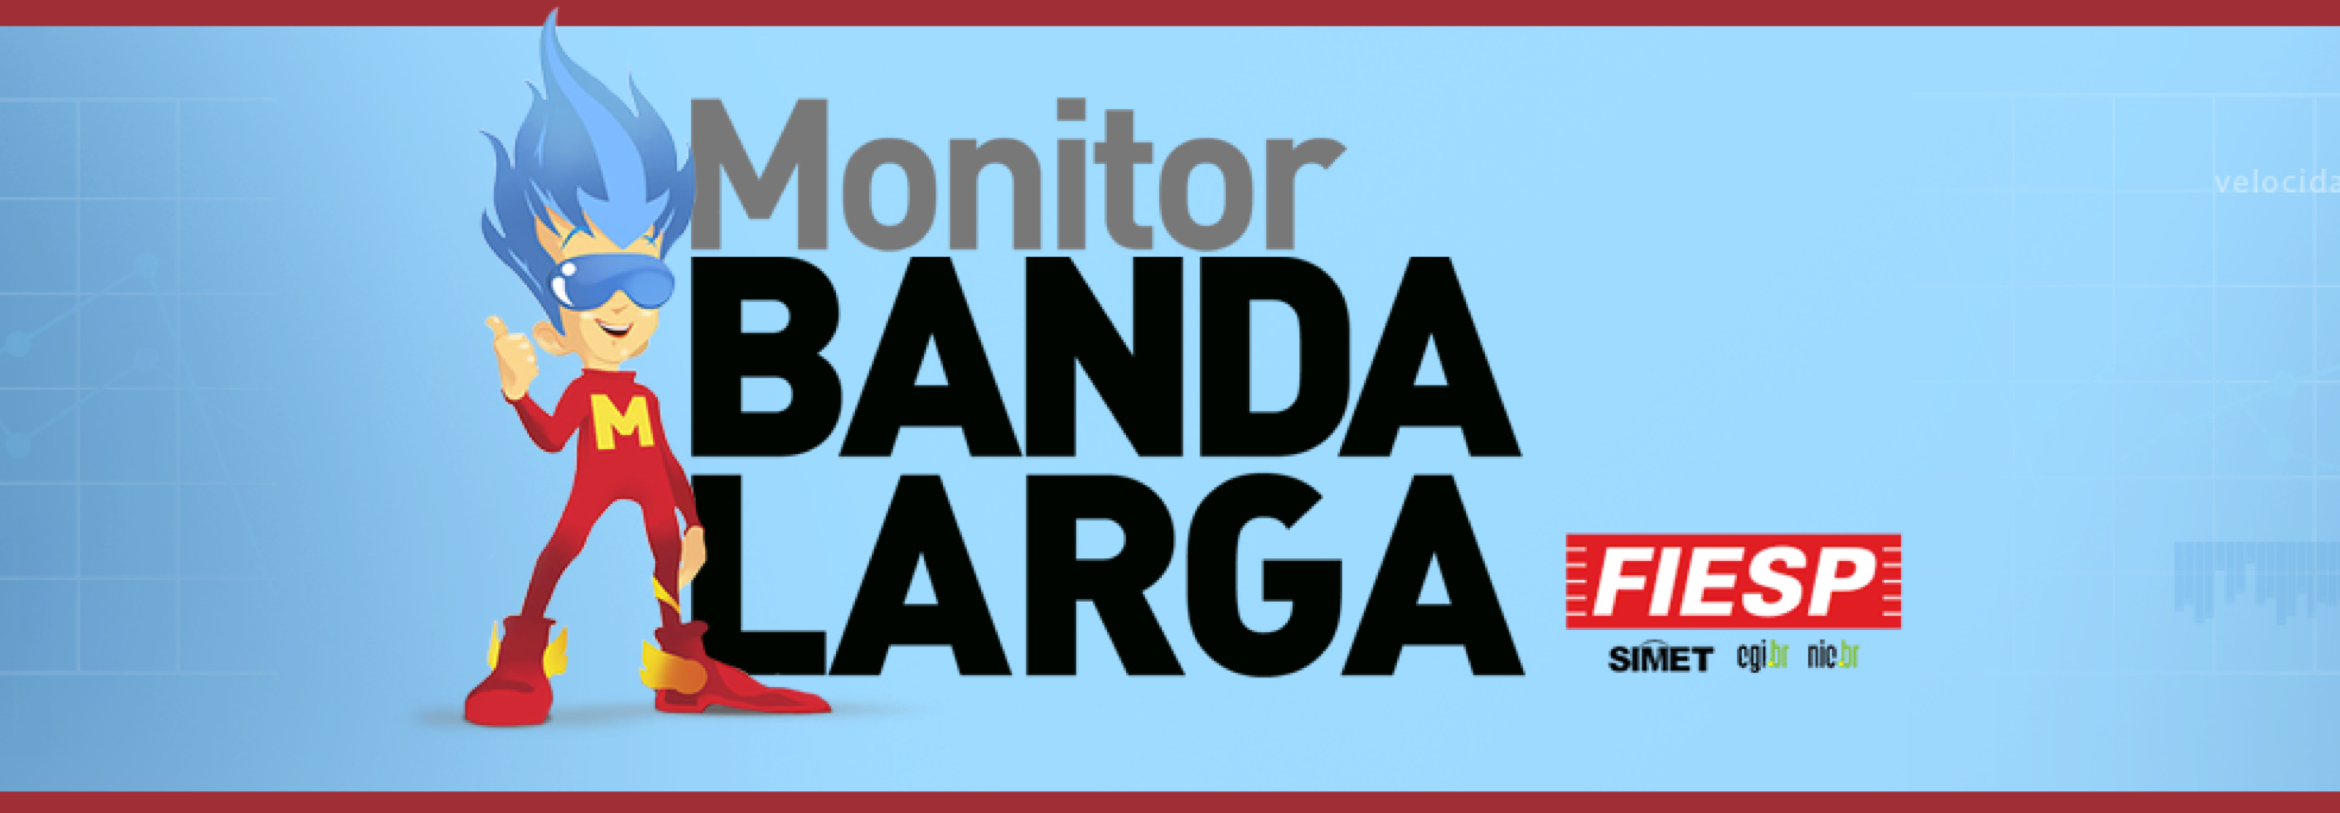 Print da tela - Monitor de Banda Larga